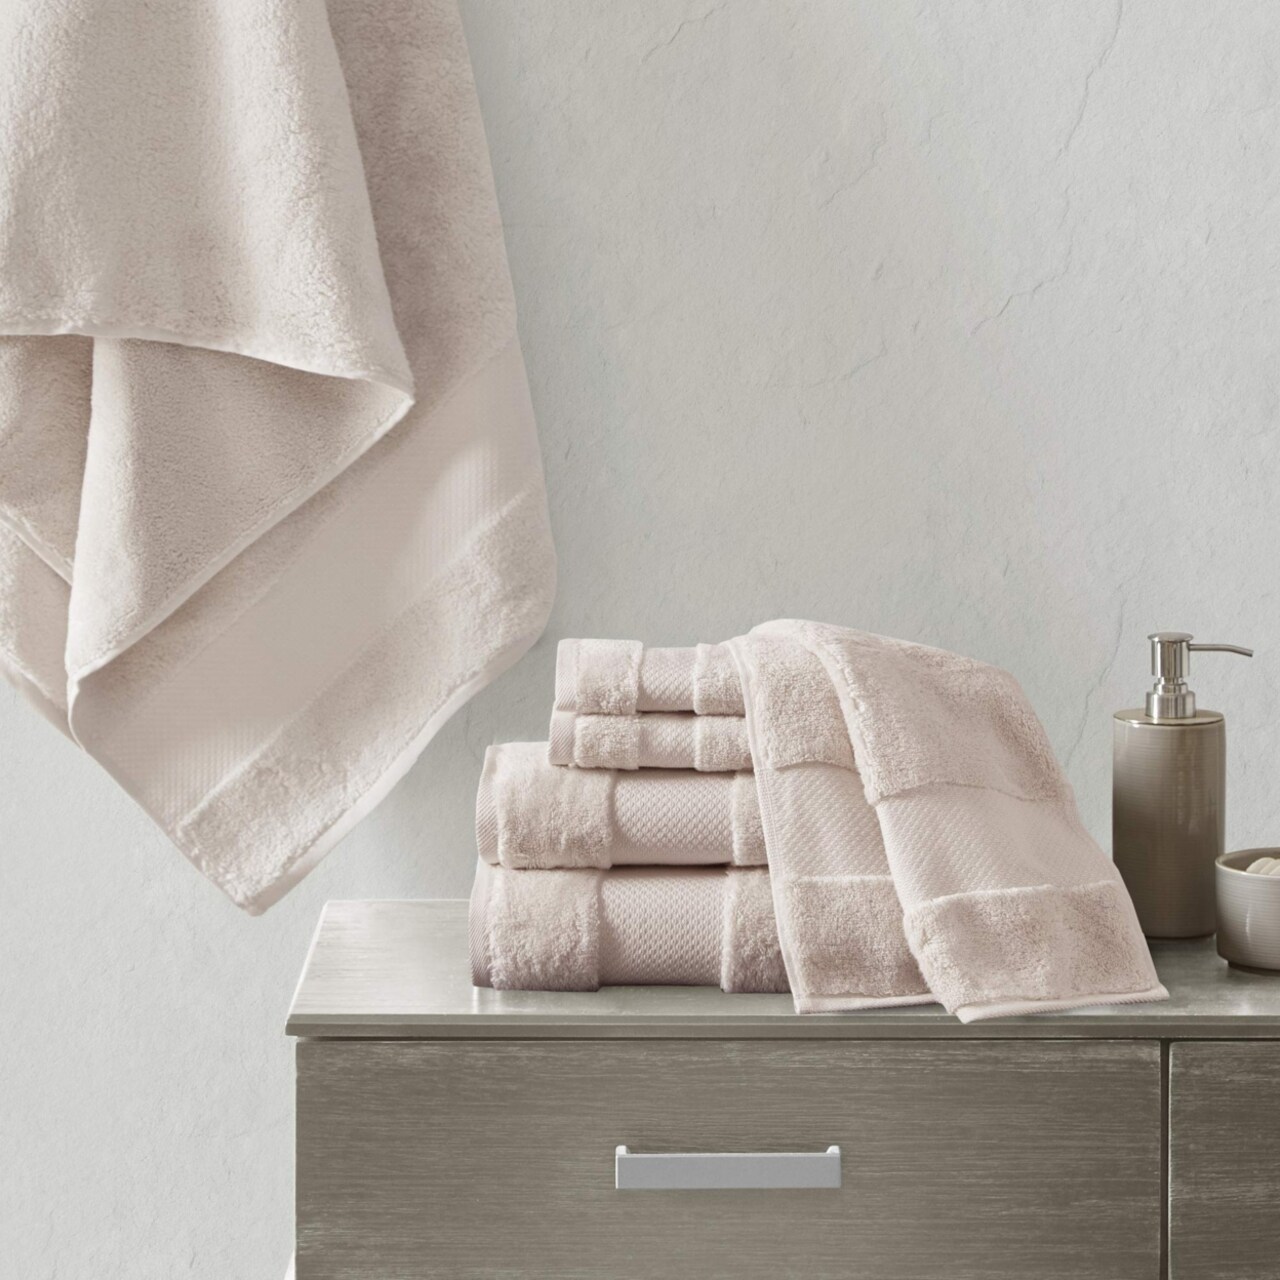 MADISON PARK SIGNATURE Cotton 6 Piece Bath Towel Set in Blush Finish  MPS73-450